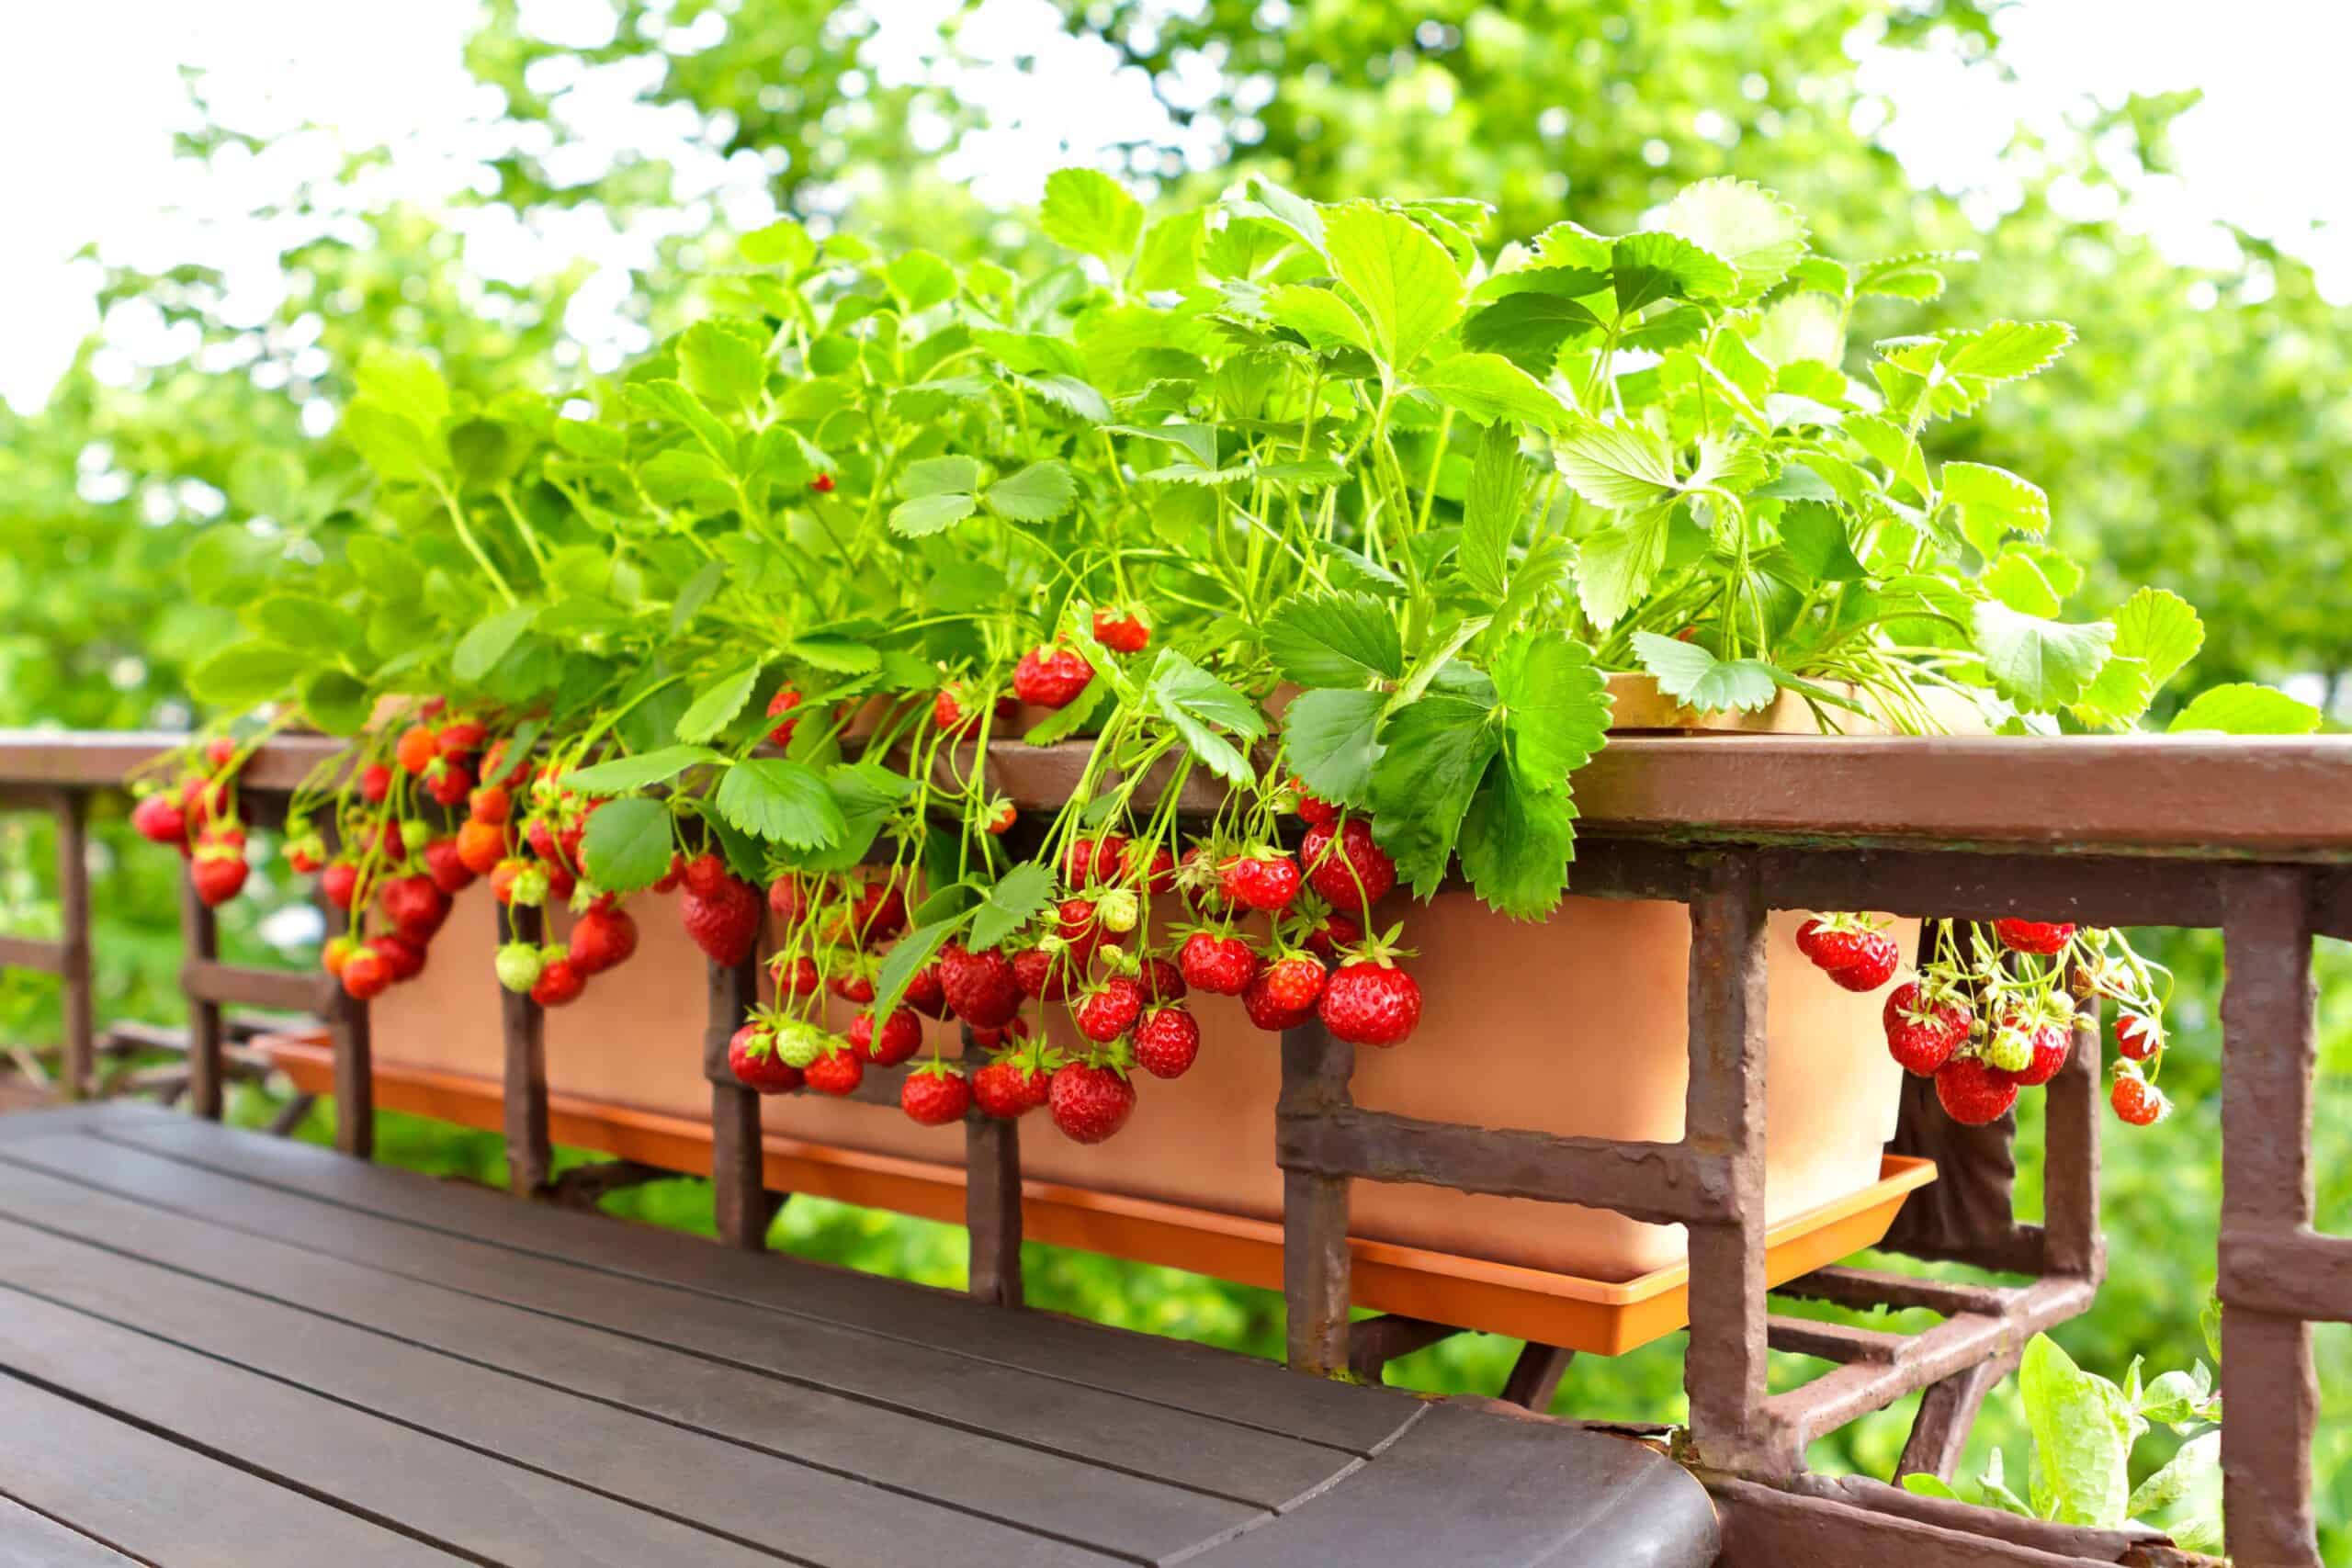 Strawberries growing on balcony rail